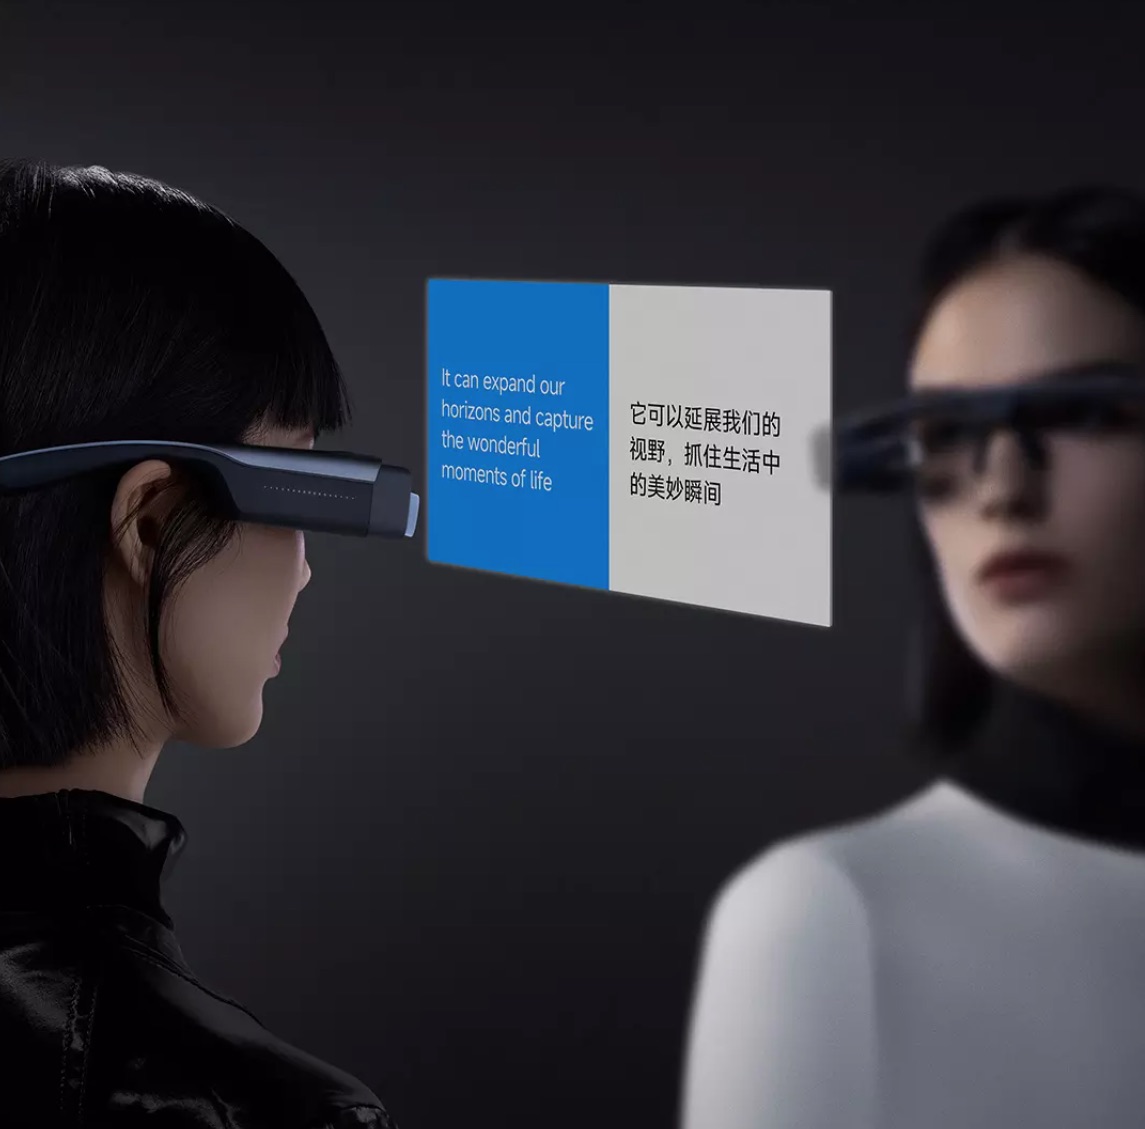 Xiaomi Debuts Live-Translating AR Glasses To Make The World Less Misunderstood